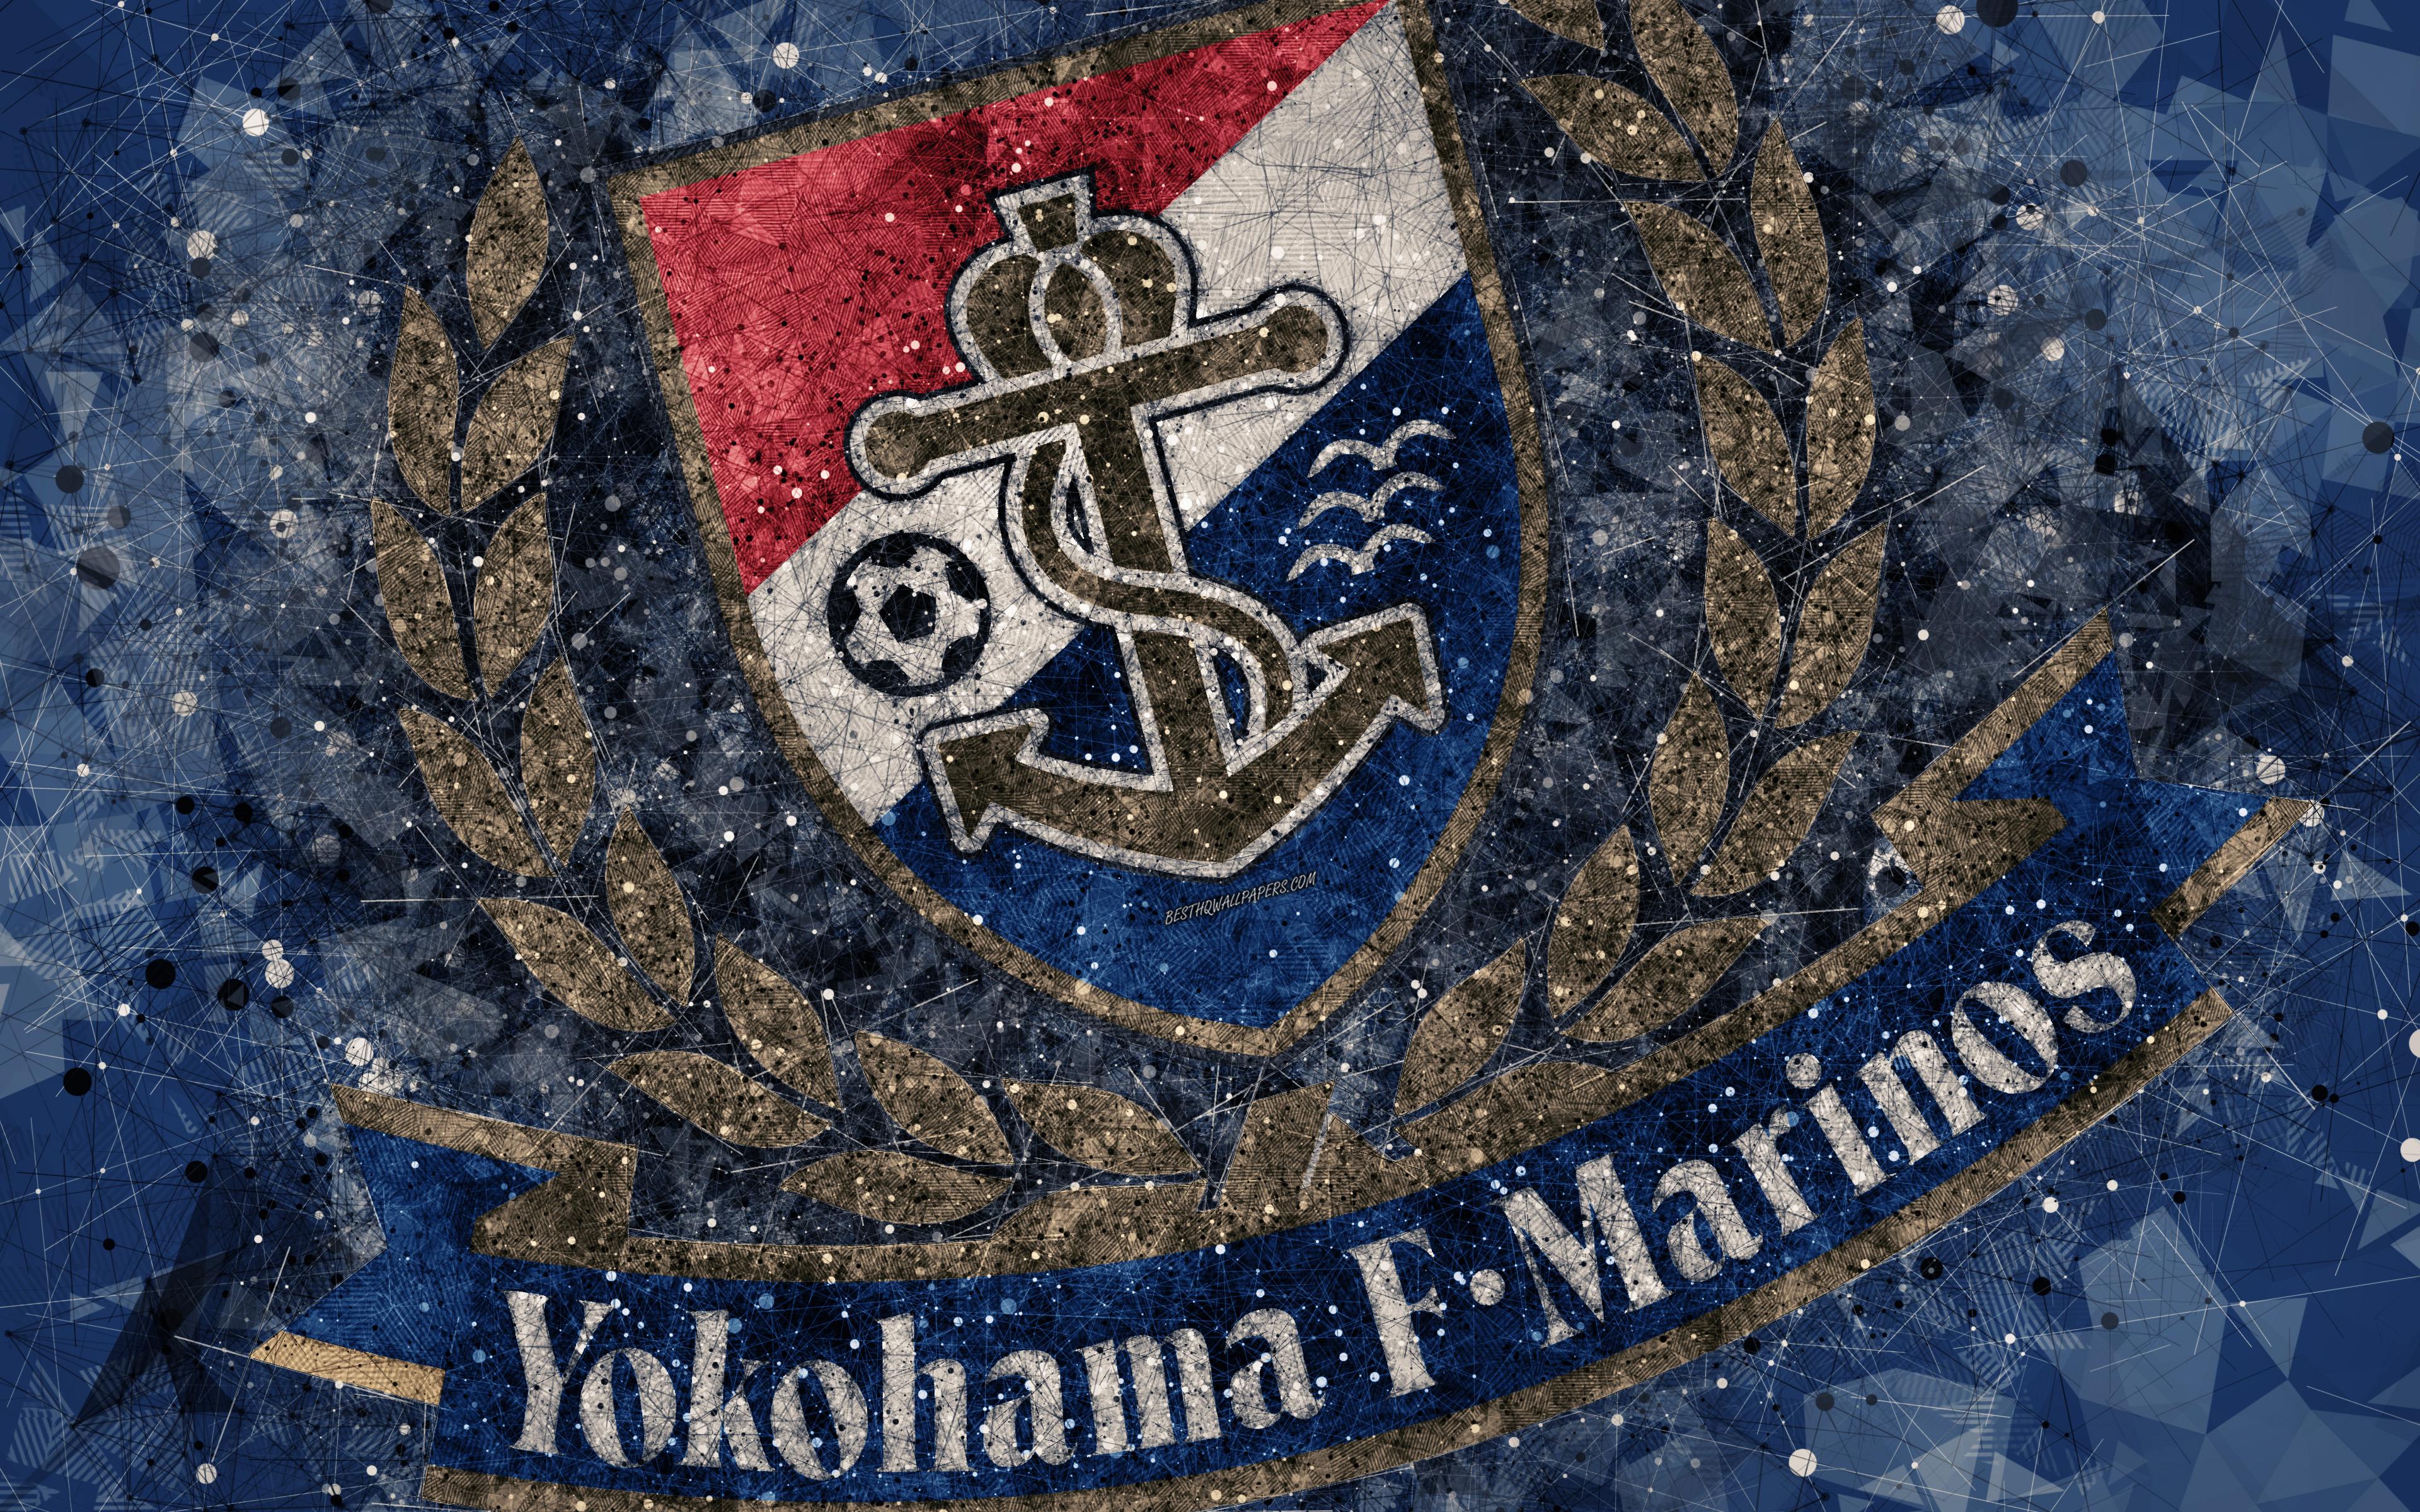 Download wallpaper Yokohama F Marinos, 4k, Japanese football club